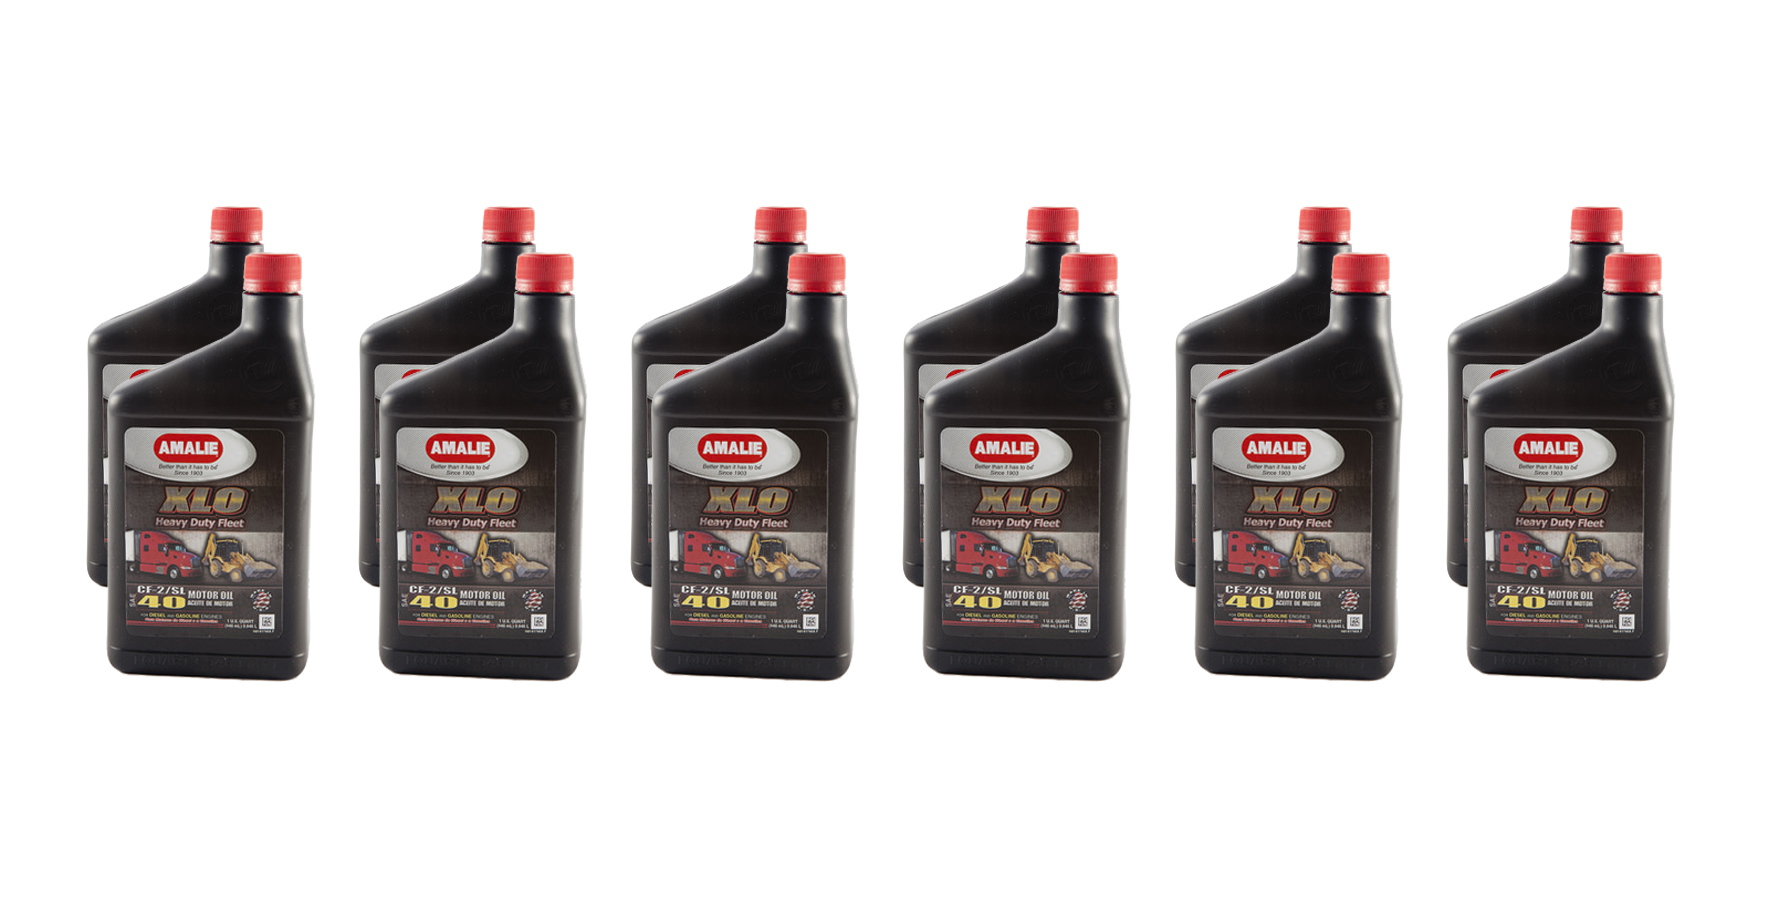 Shop for AMALIE MOTOR OIL Oils, Fluids and Additives :: Racecar Engineering